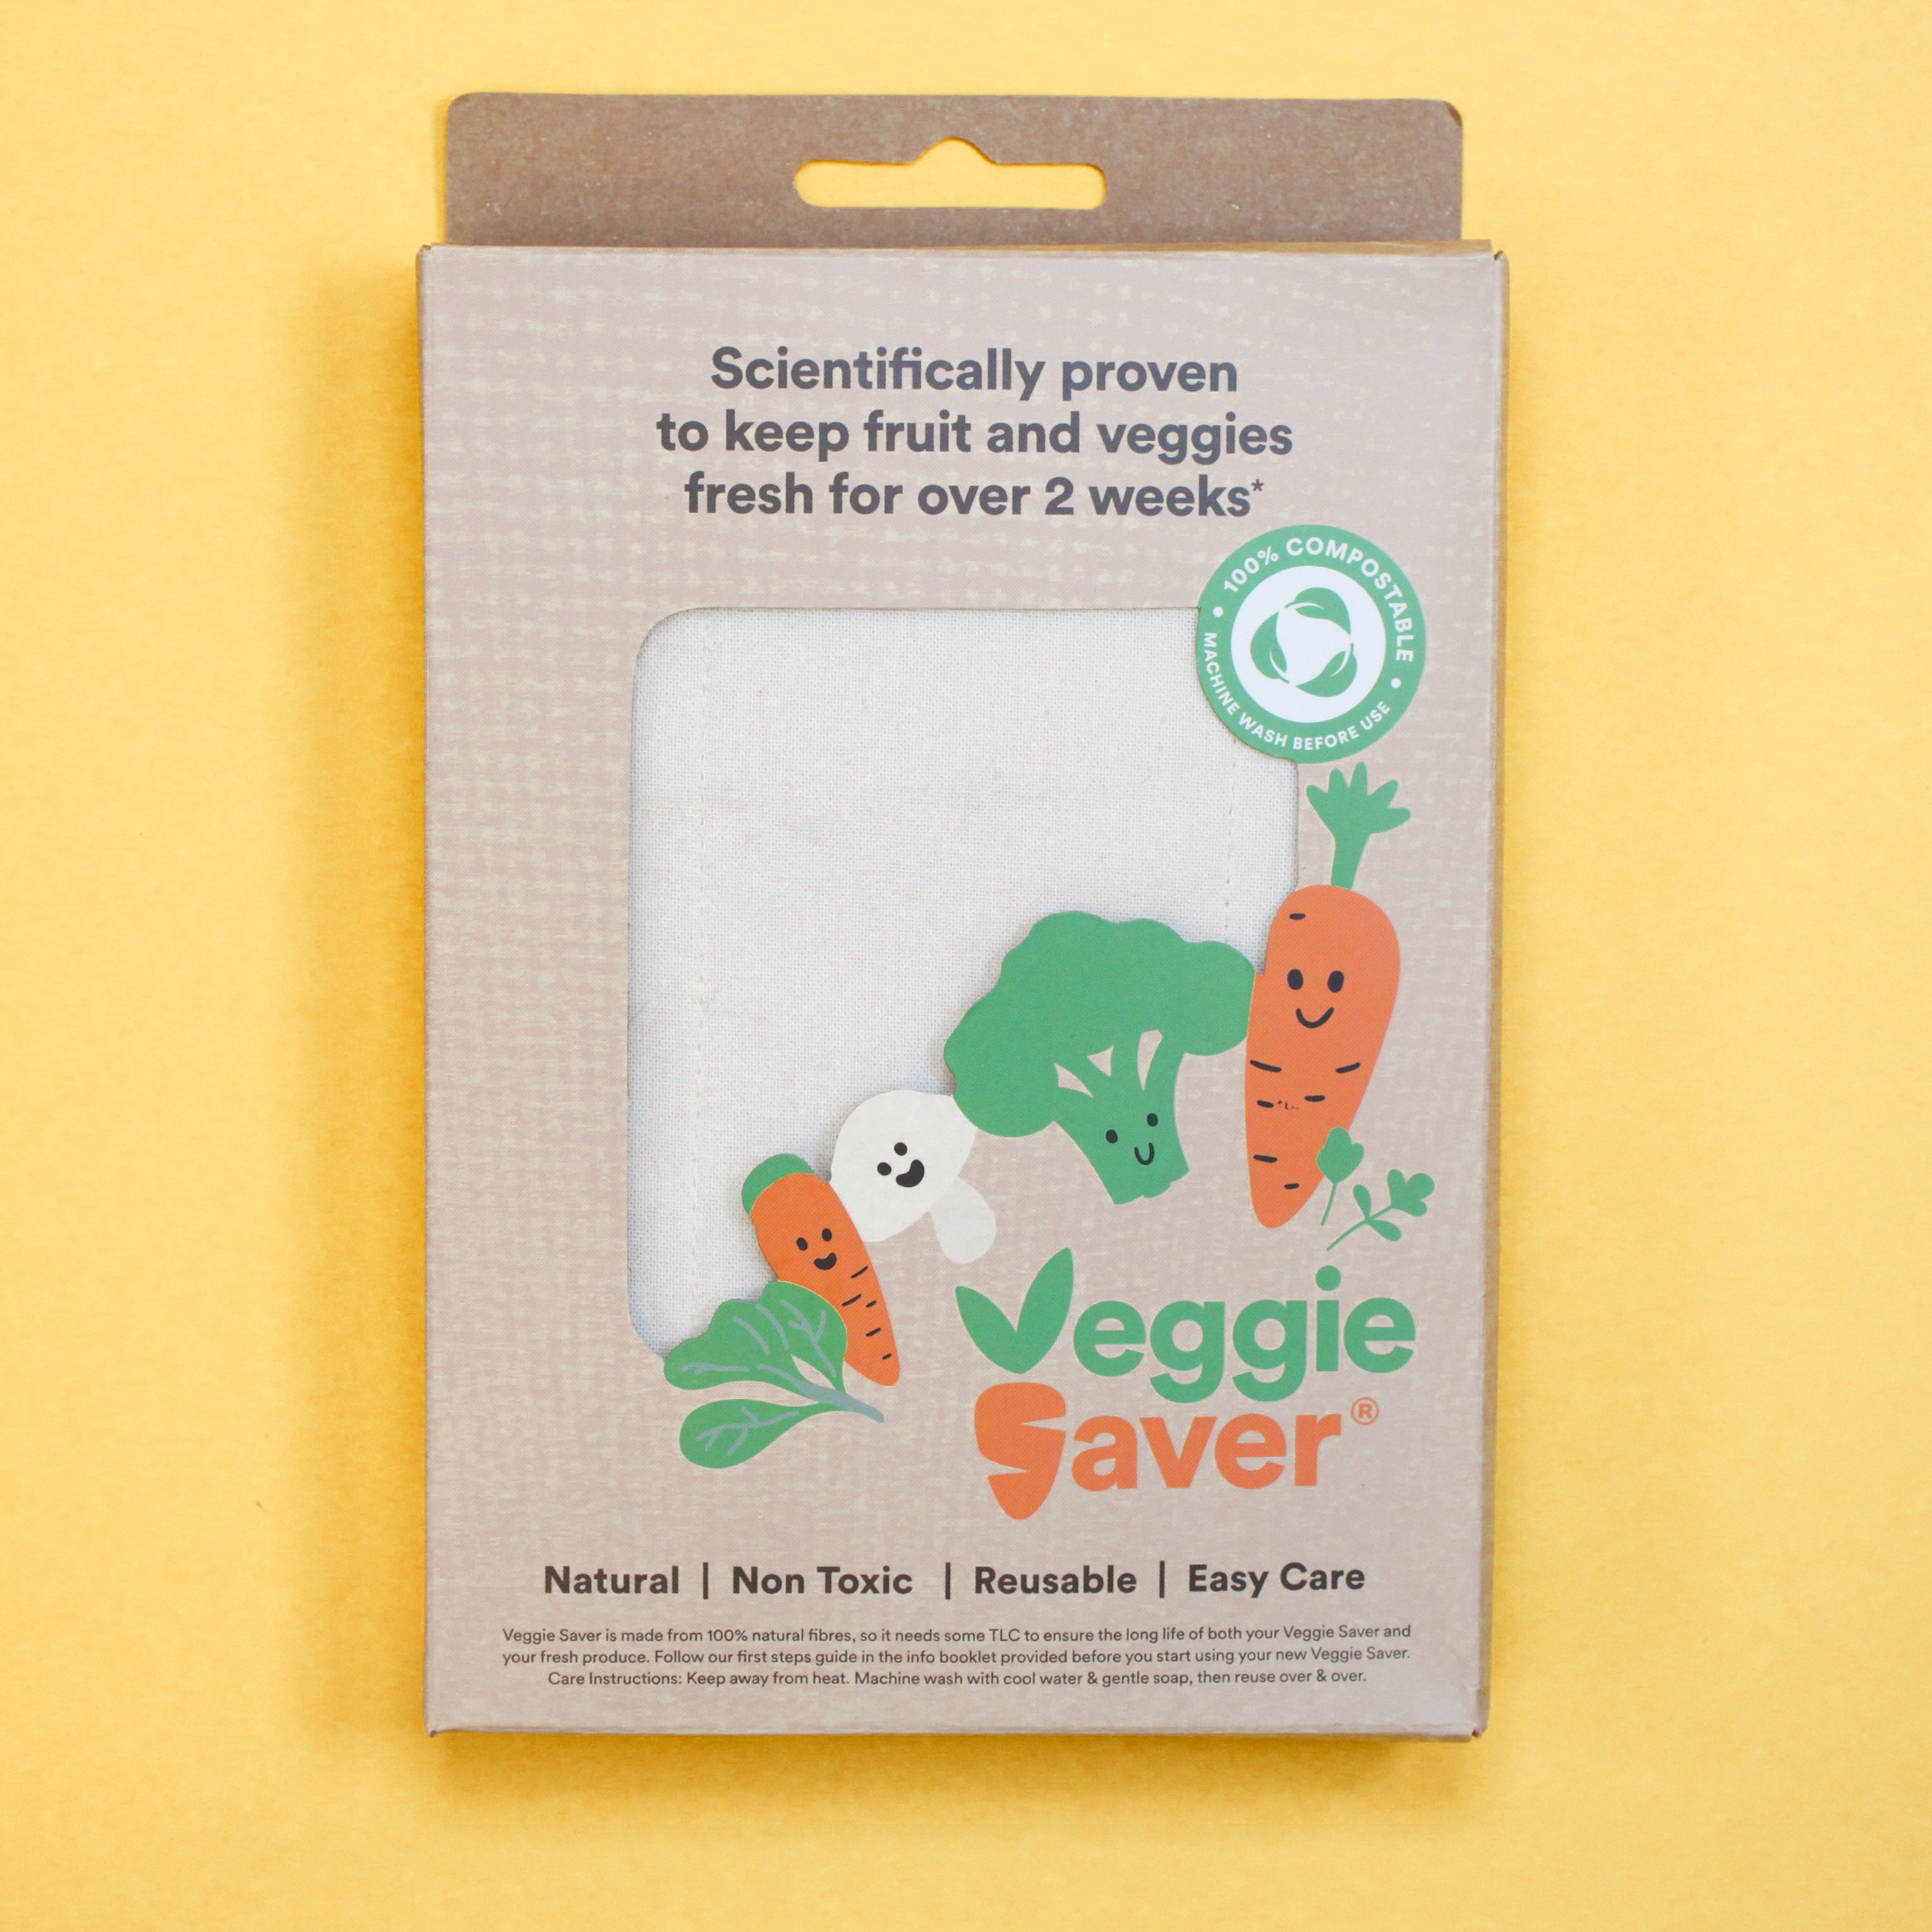 About - Veggie Saver